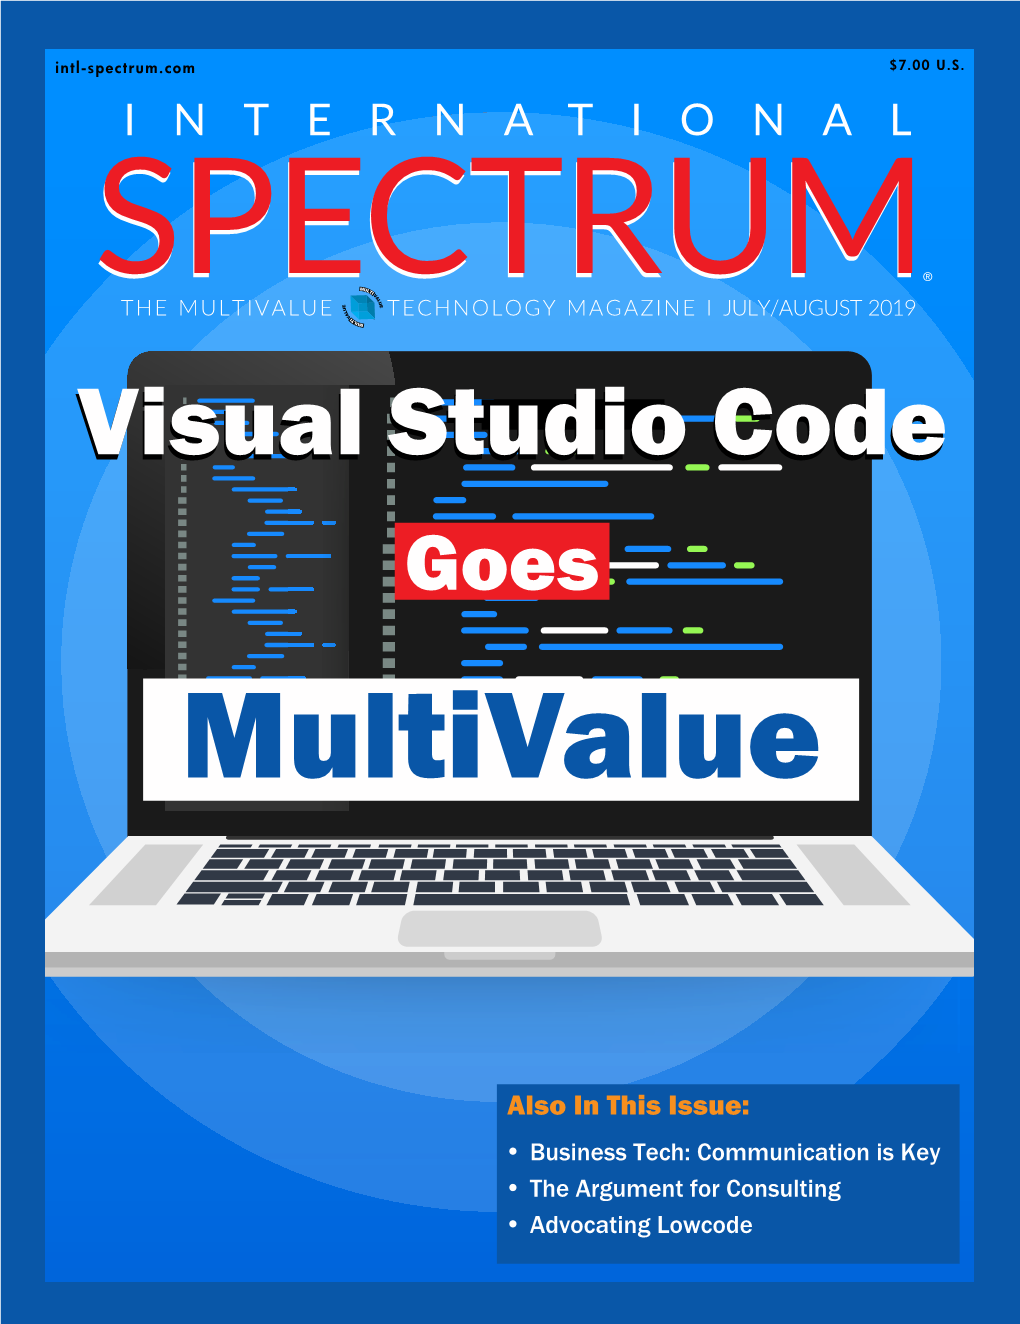 Visual Studio Code Goes Multivalue